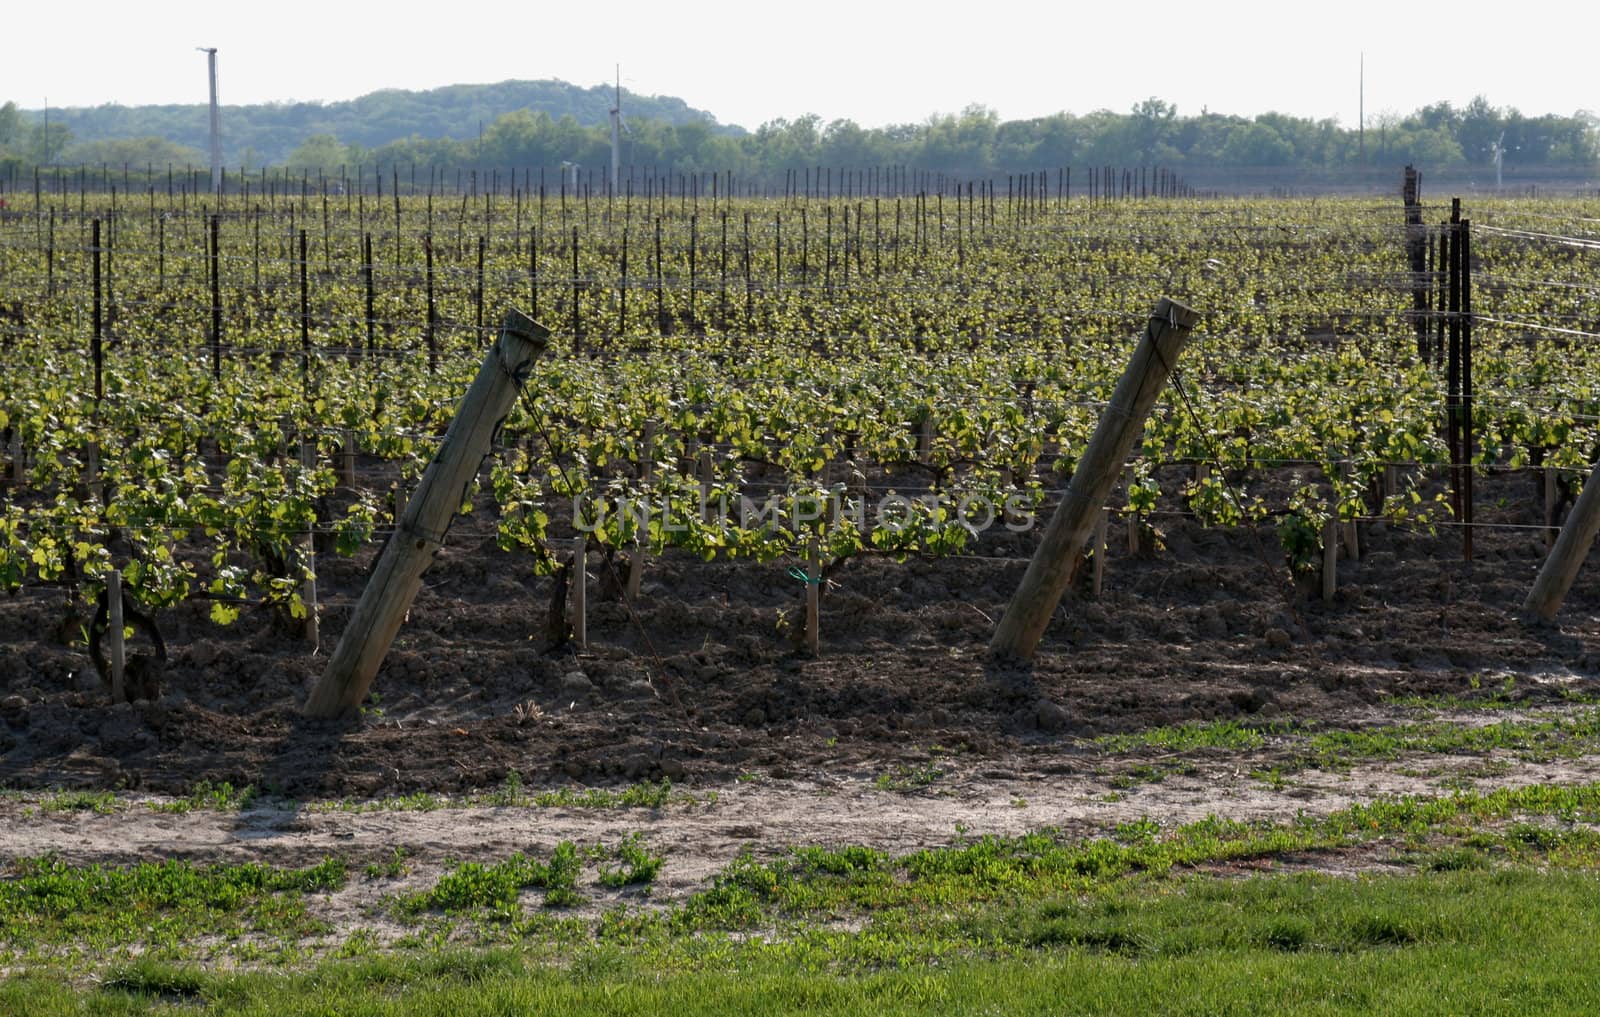 A large vineyard at dusk.
